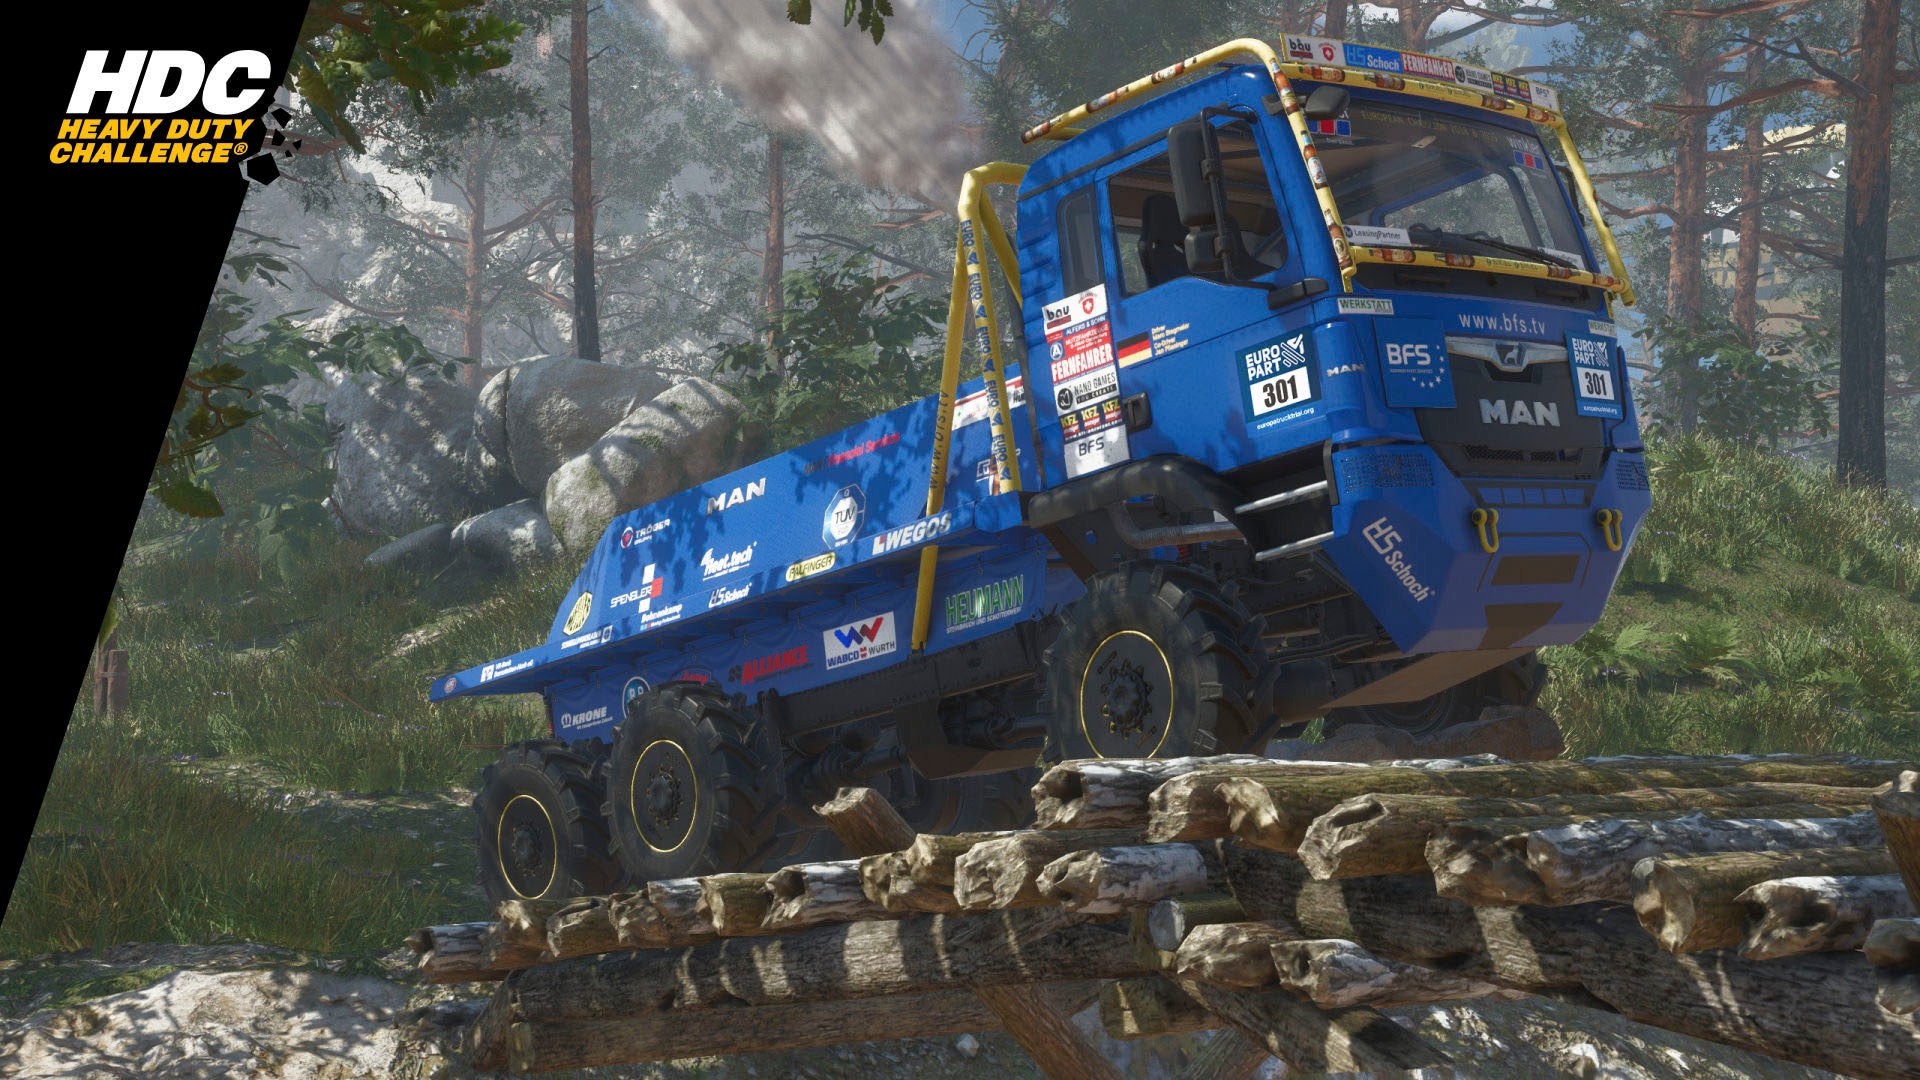 NBG Spielesoftware »The Off-Road Truck Simulator - Heavy Duty Challenge«, PlayStation 5